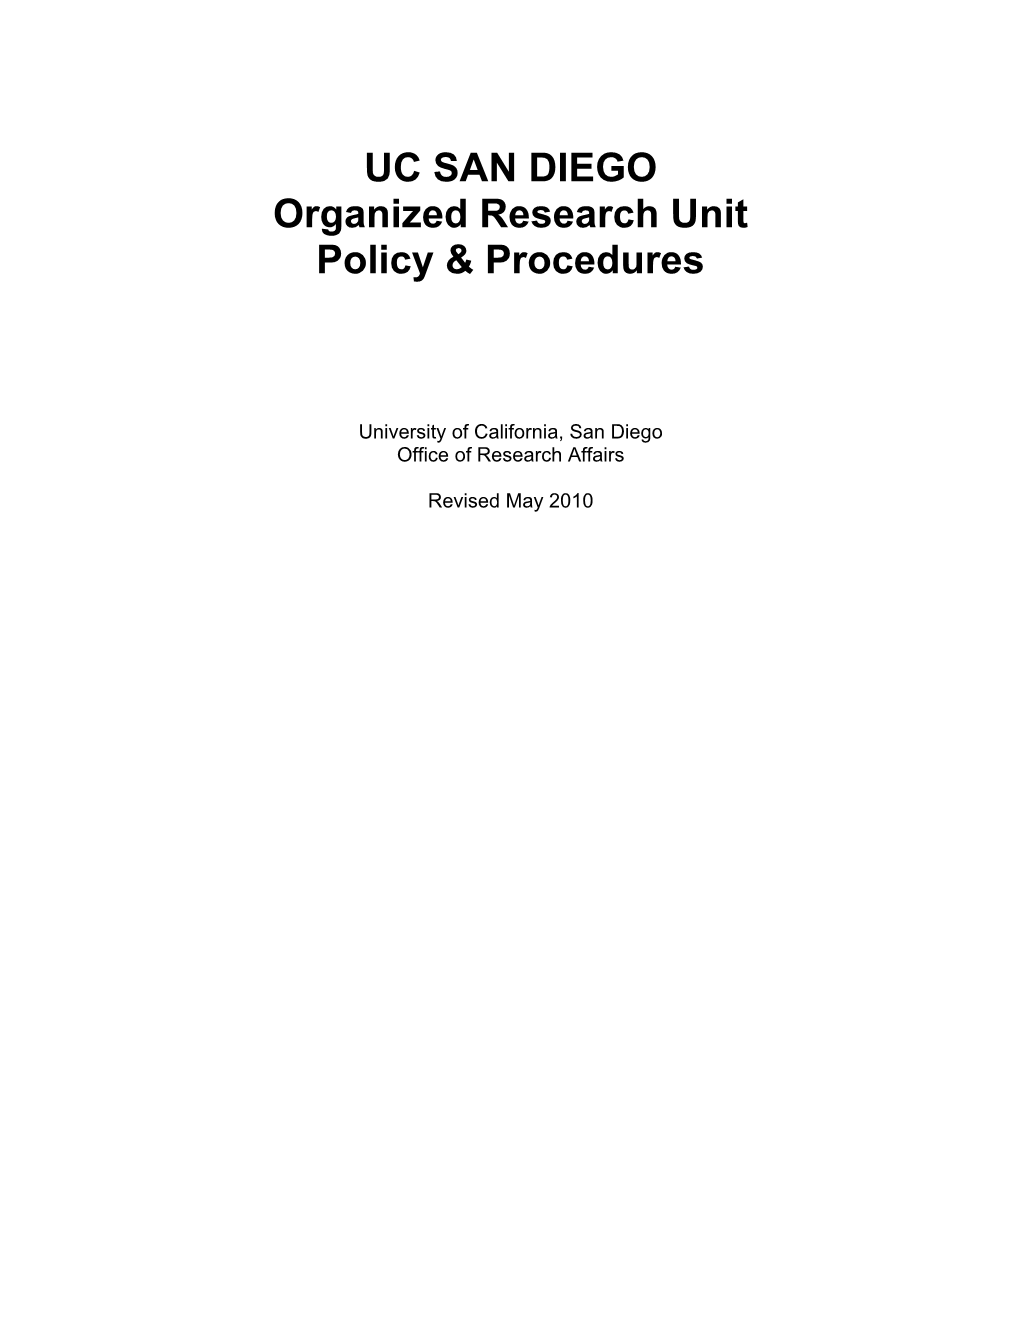 Organized Research Unit